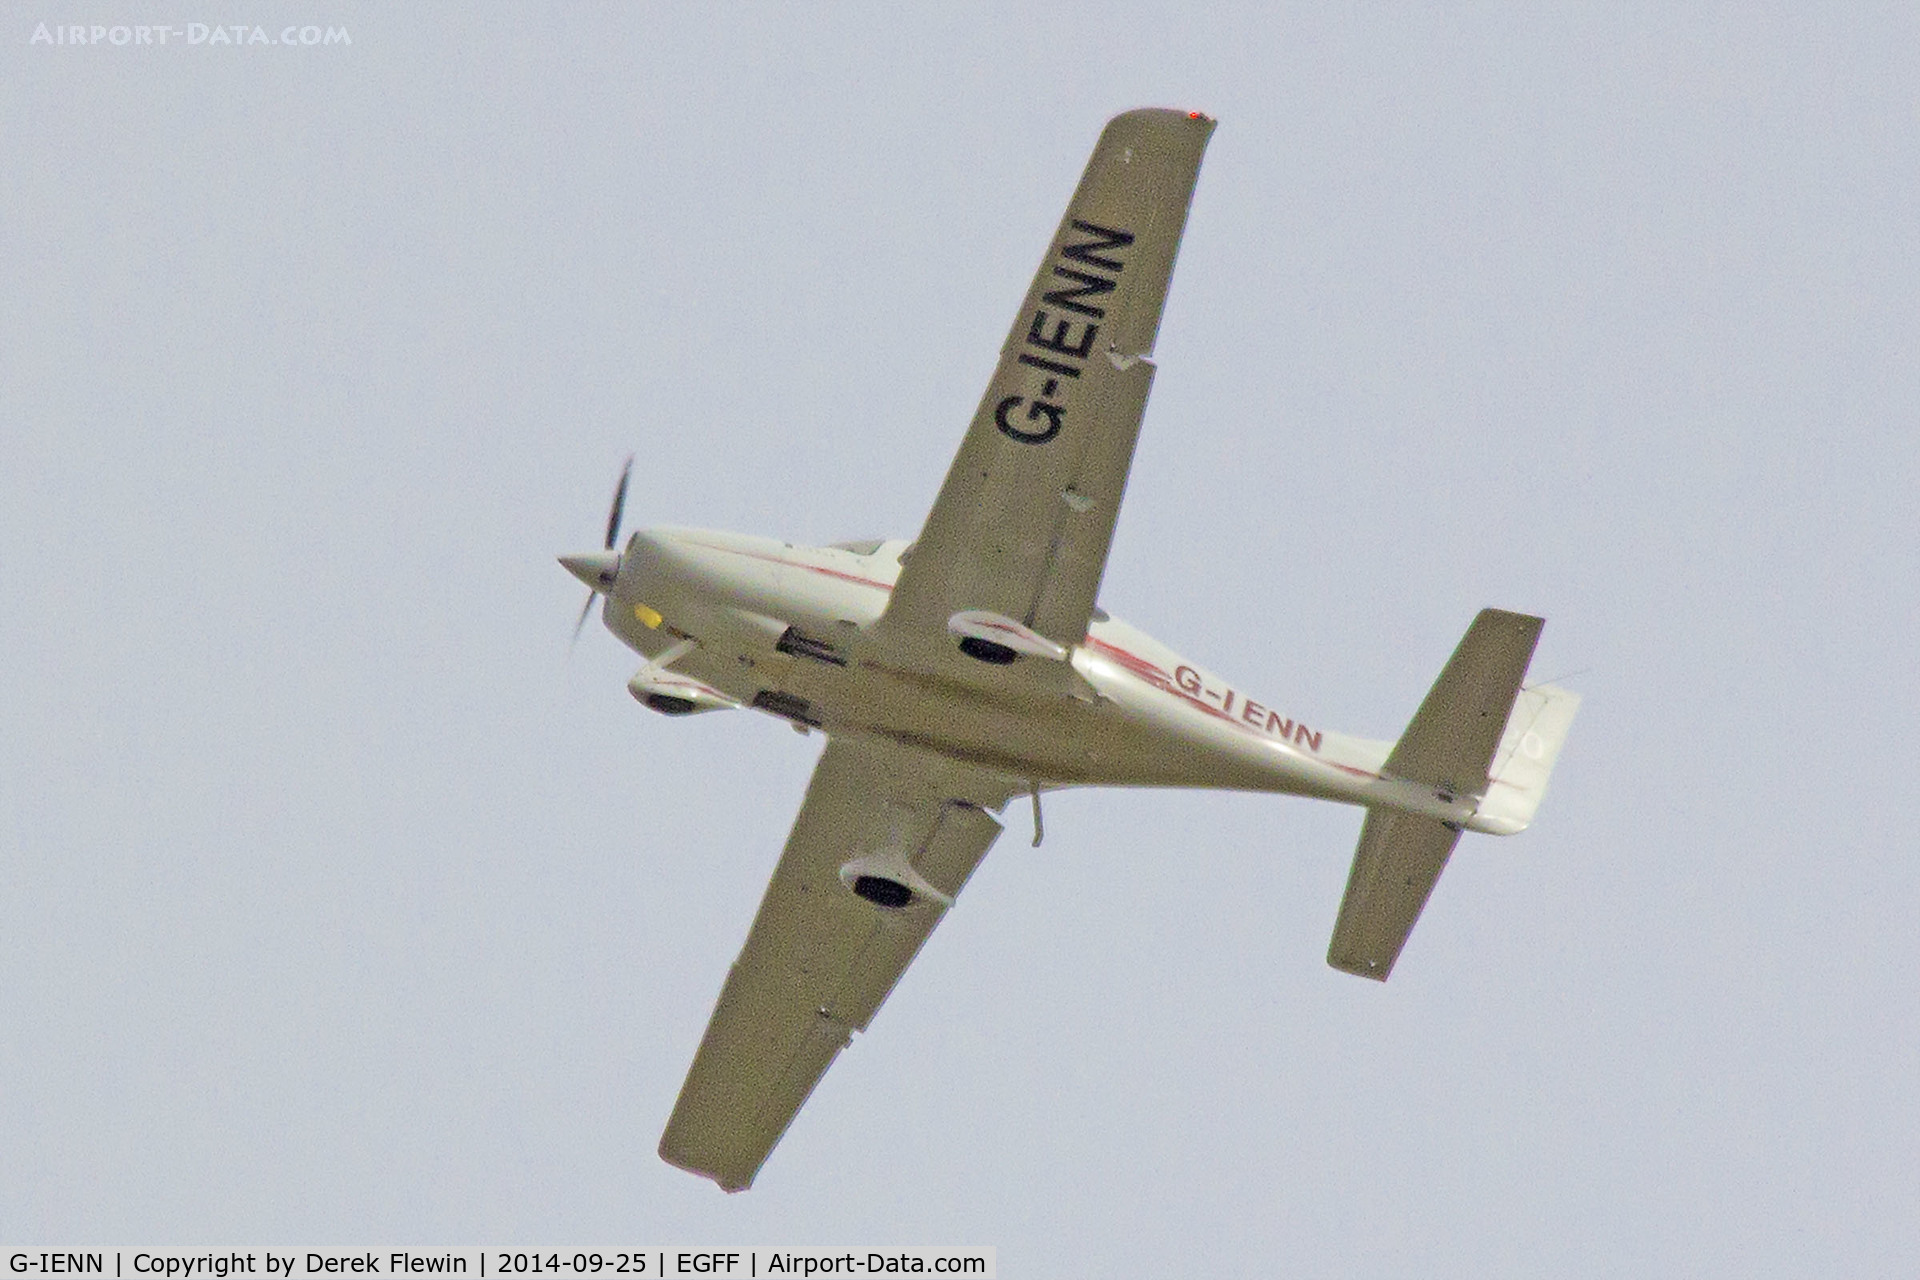 G-IENN, 2008 Cirrus SR20 C/N 1899, Cirrus SR-20, Tatenhill based, previously N621DA, G-TSGE, seen in the overhead at EGFF, following a practice ILS approach.